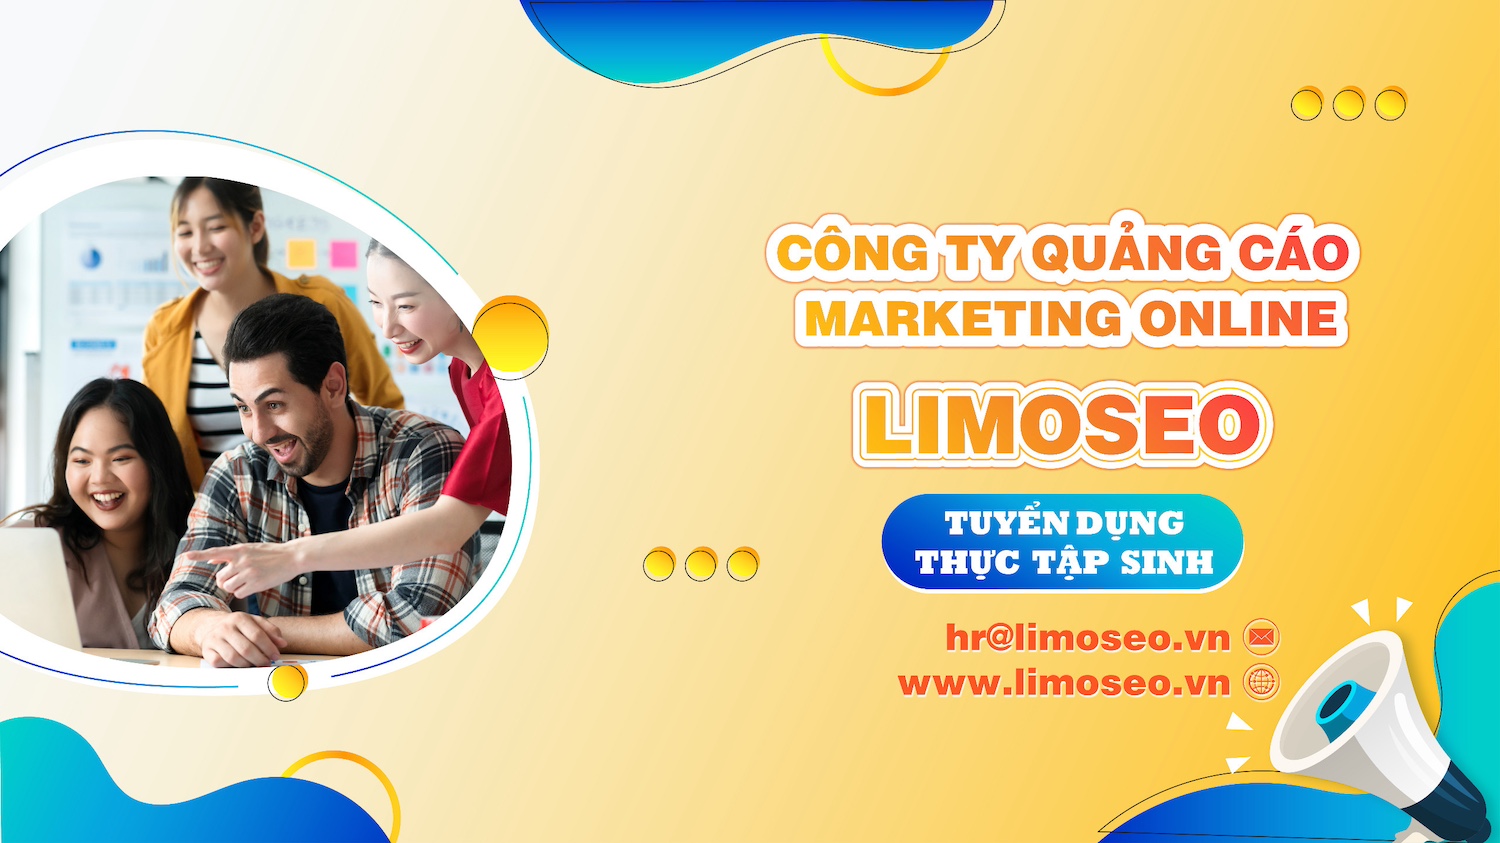 Tuyển dụng TTS Marketing Limoseo